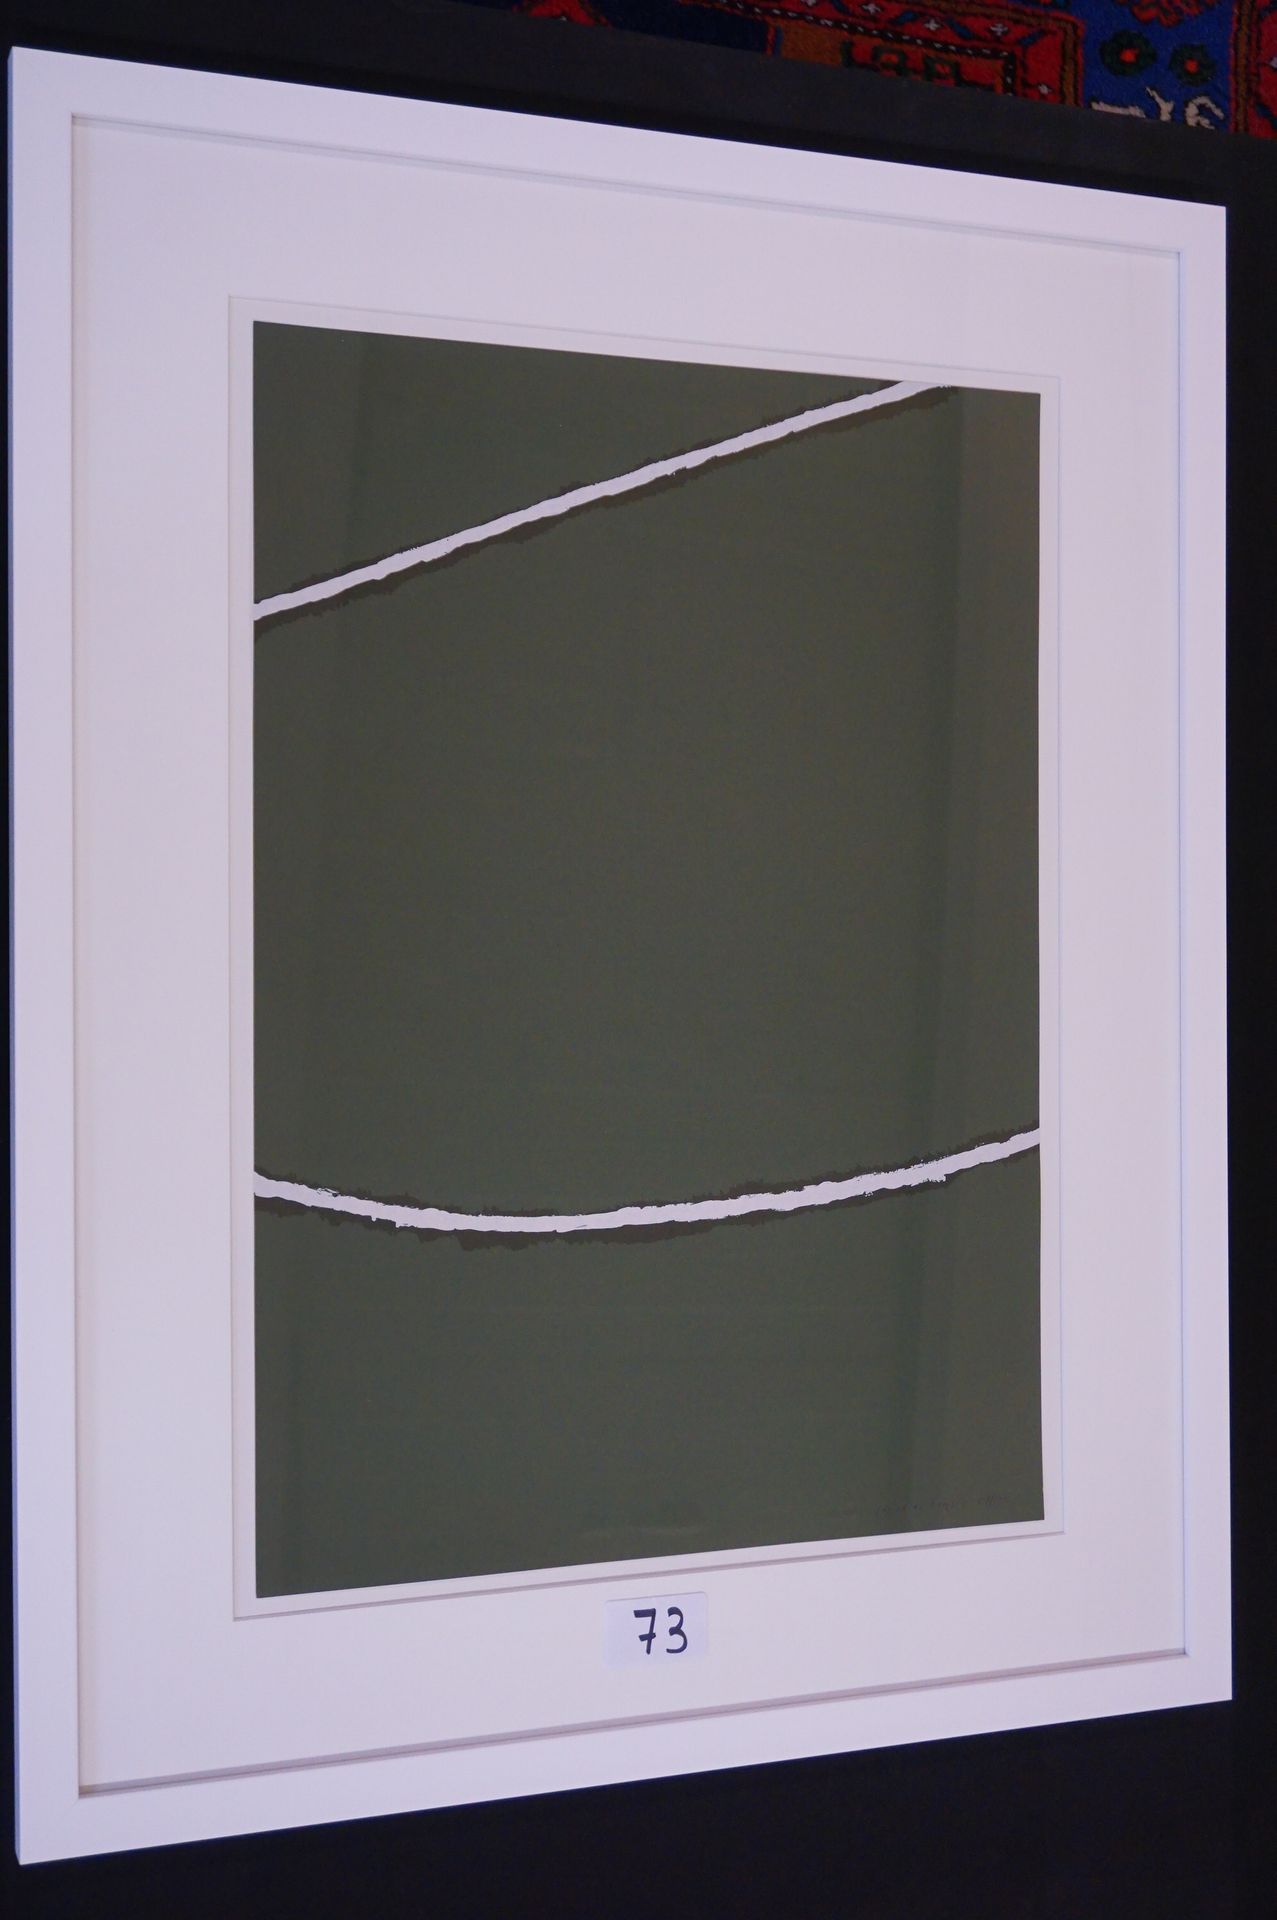 RAOUL DE KEYSER (1930 - 2012) "粉笔线" - 彩色丝网印刷 - 签名 - 编号14/100 - 70 x 50 cm